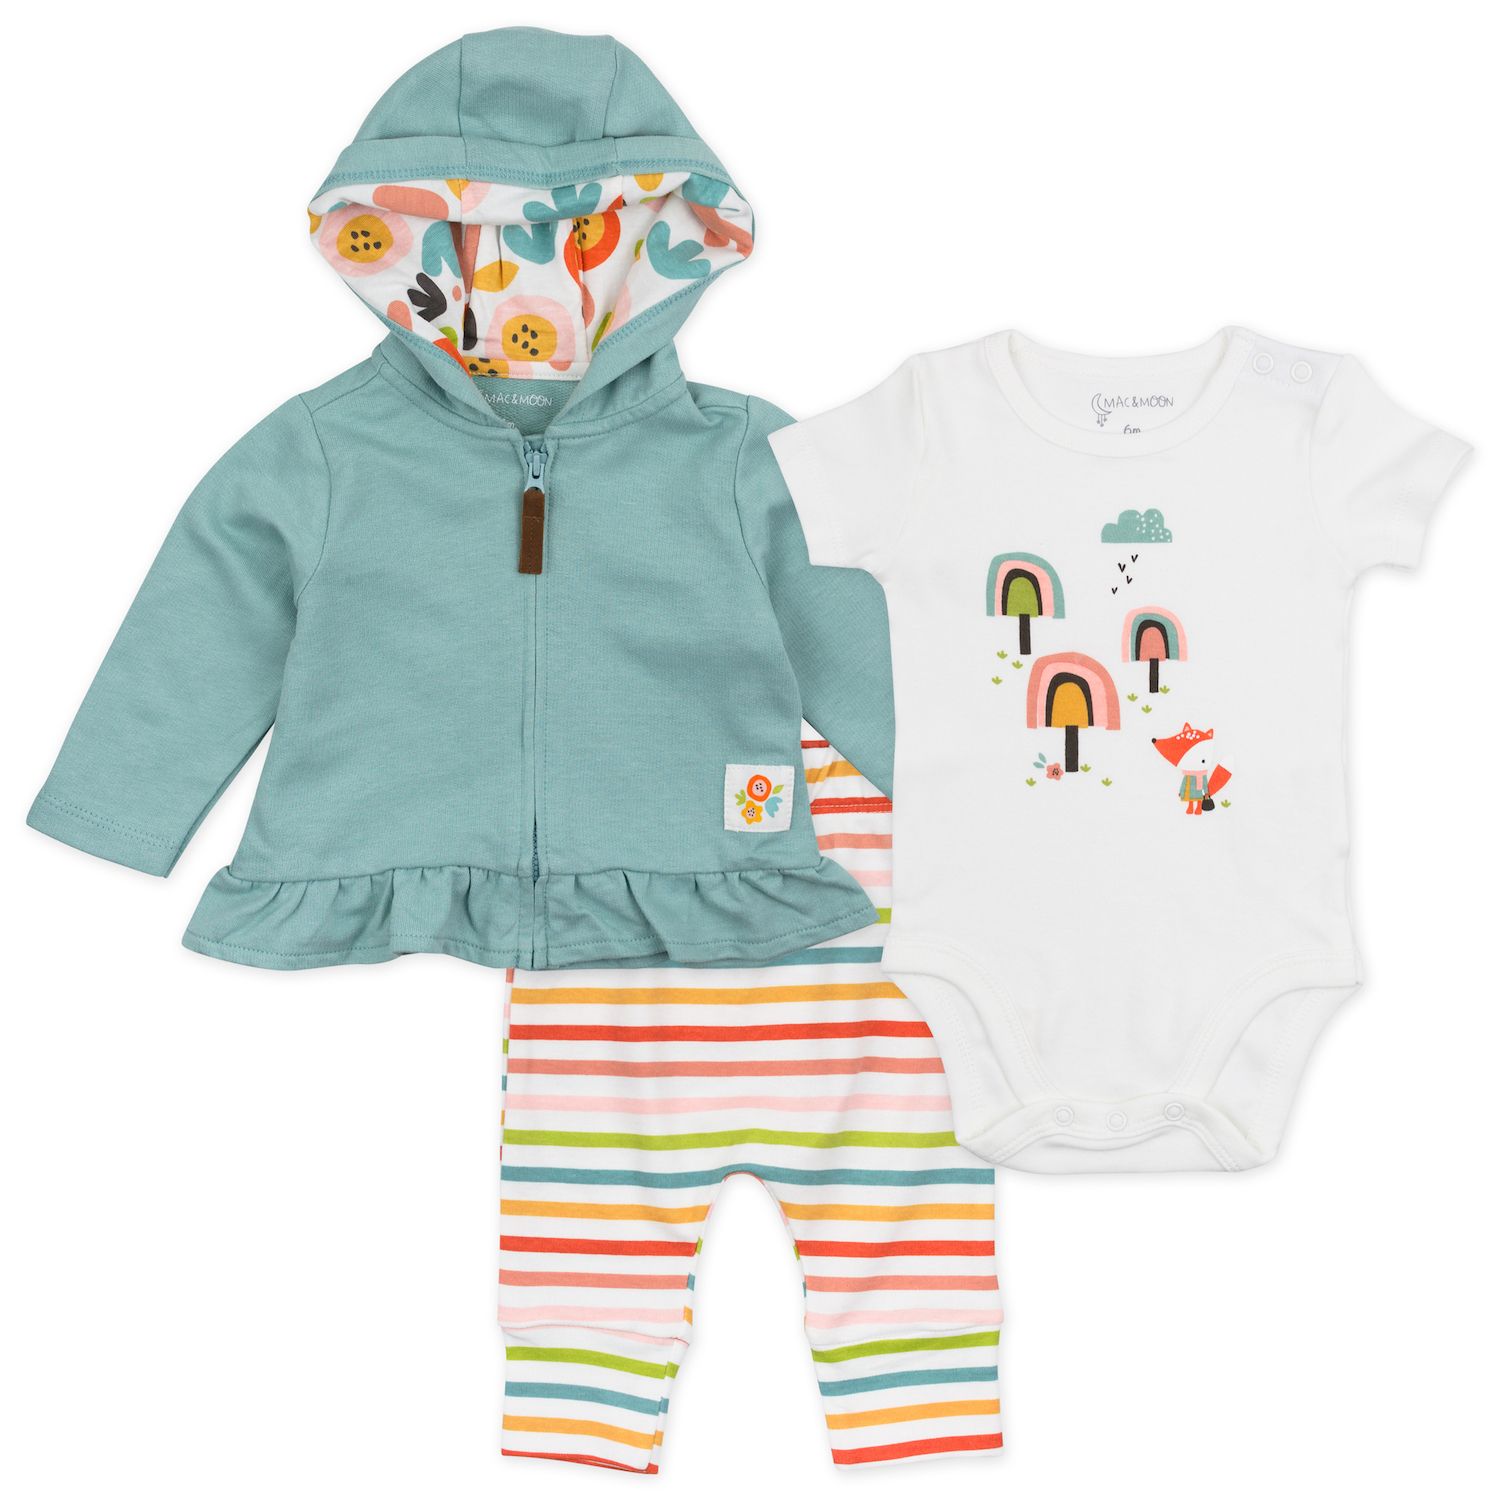 mac & moon baby clothes